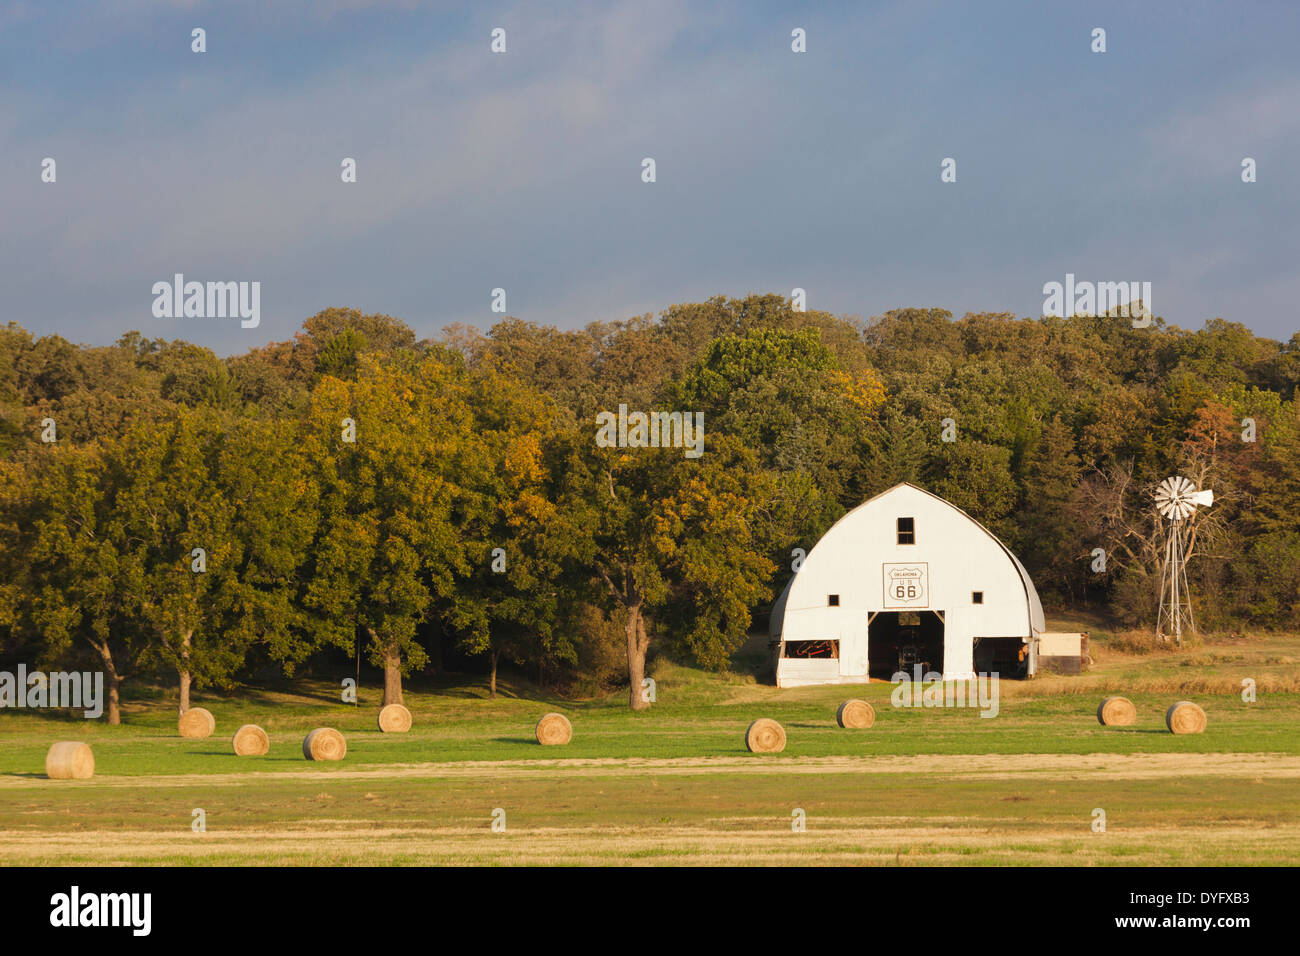 USA, Oklahoma, Arcada, Pops, Route 66 Rock of Ages Farm Stock Photo